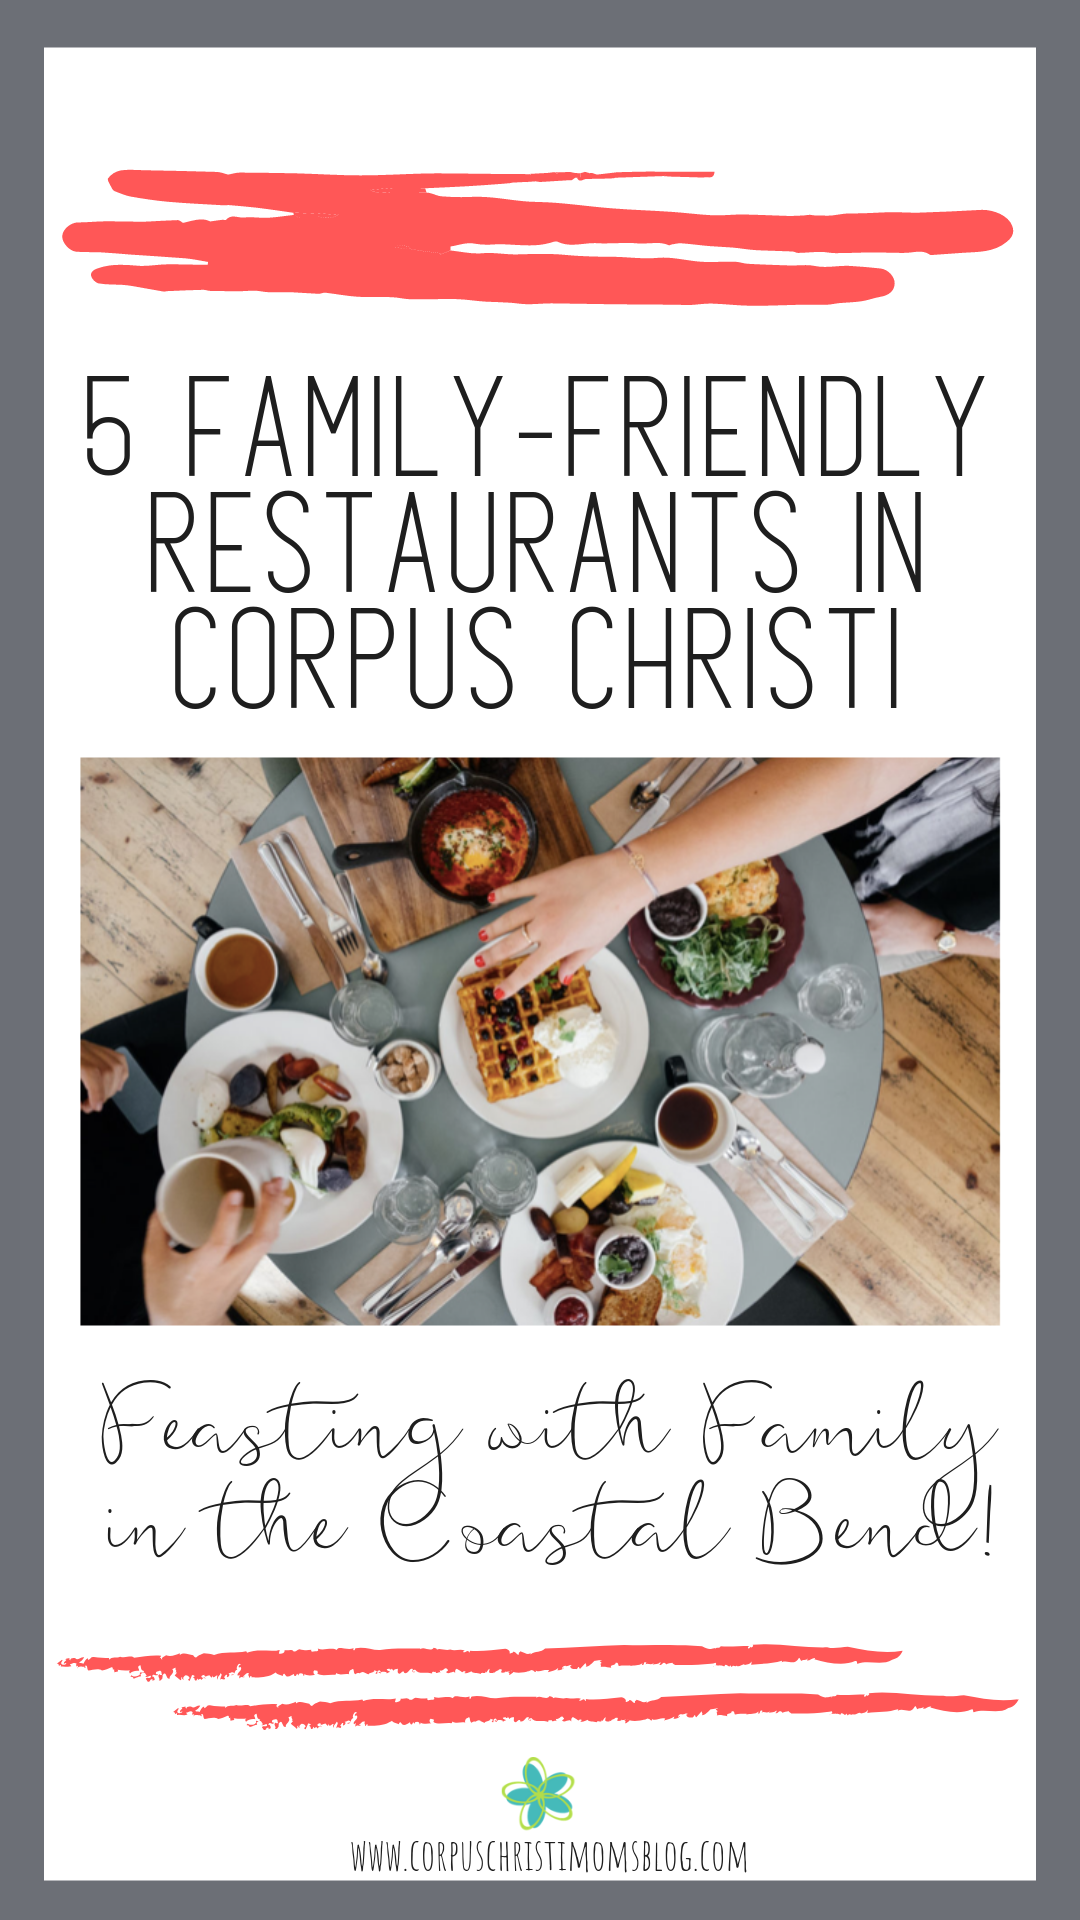 5 family friendly restaurants in corpus christi texas coastal bend